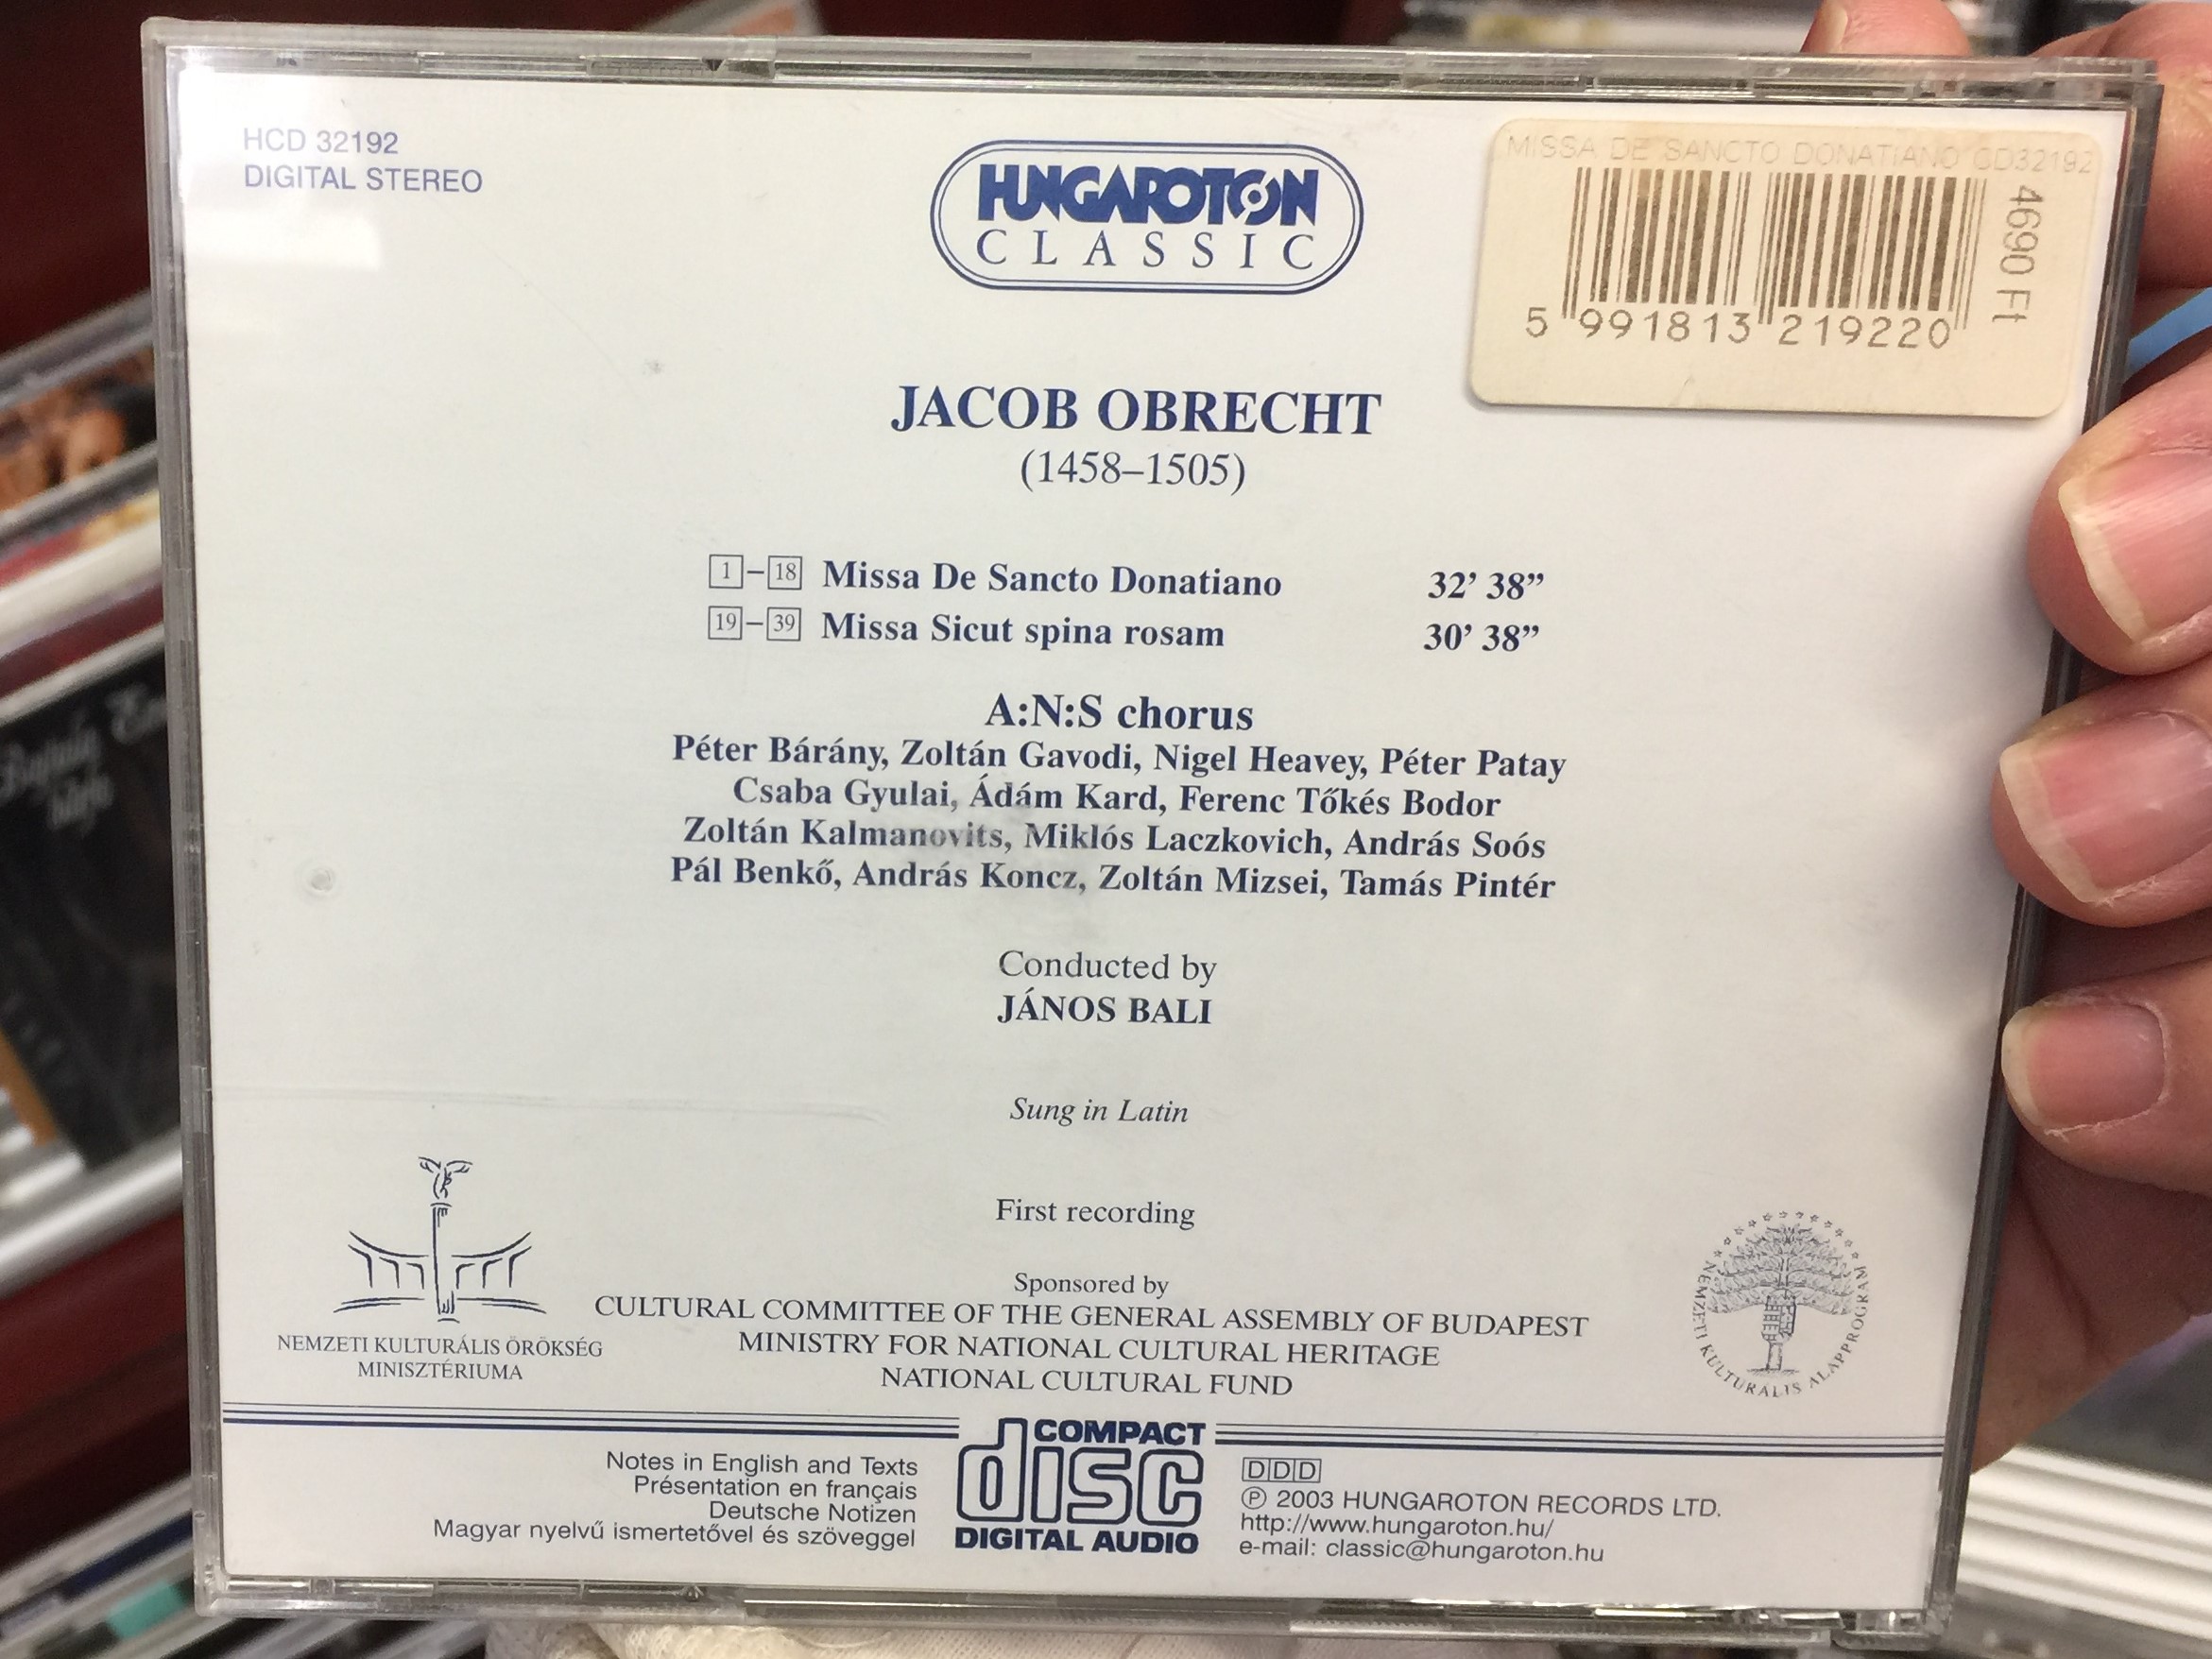 jacob-obrecht-missa-de-sancto-donatiano-missa-sicut-spina-rosam-ans-chorus-j-nos-bali-hungaroton-classic-audio-cd-2003-stereo-hcd-32192-2-.jpg